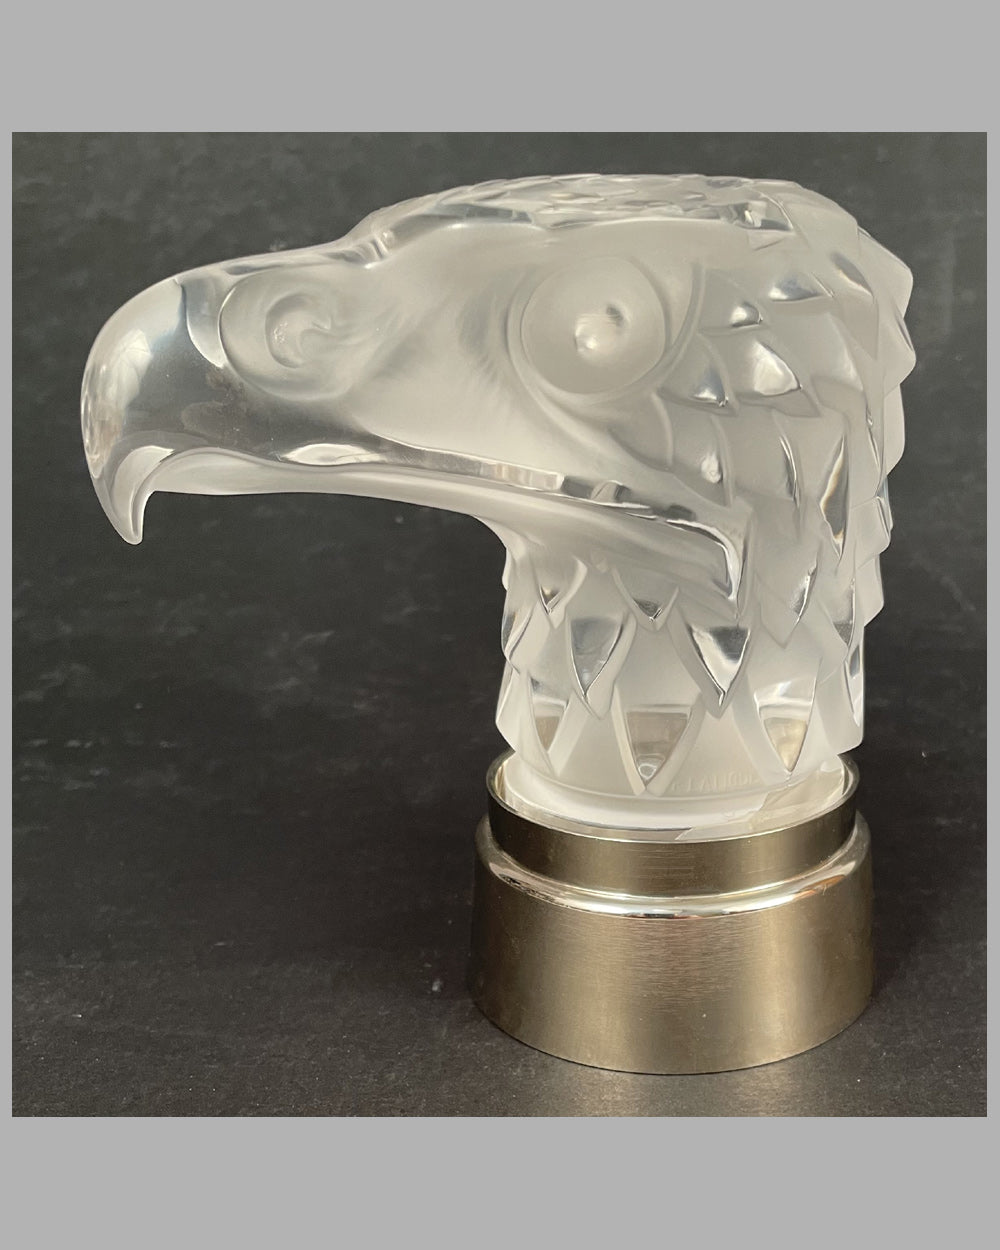 Eagle's Head (La Tête d’Aigle) hood ornament/mascot by Lalique